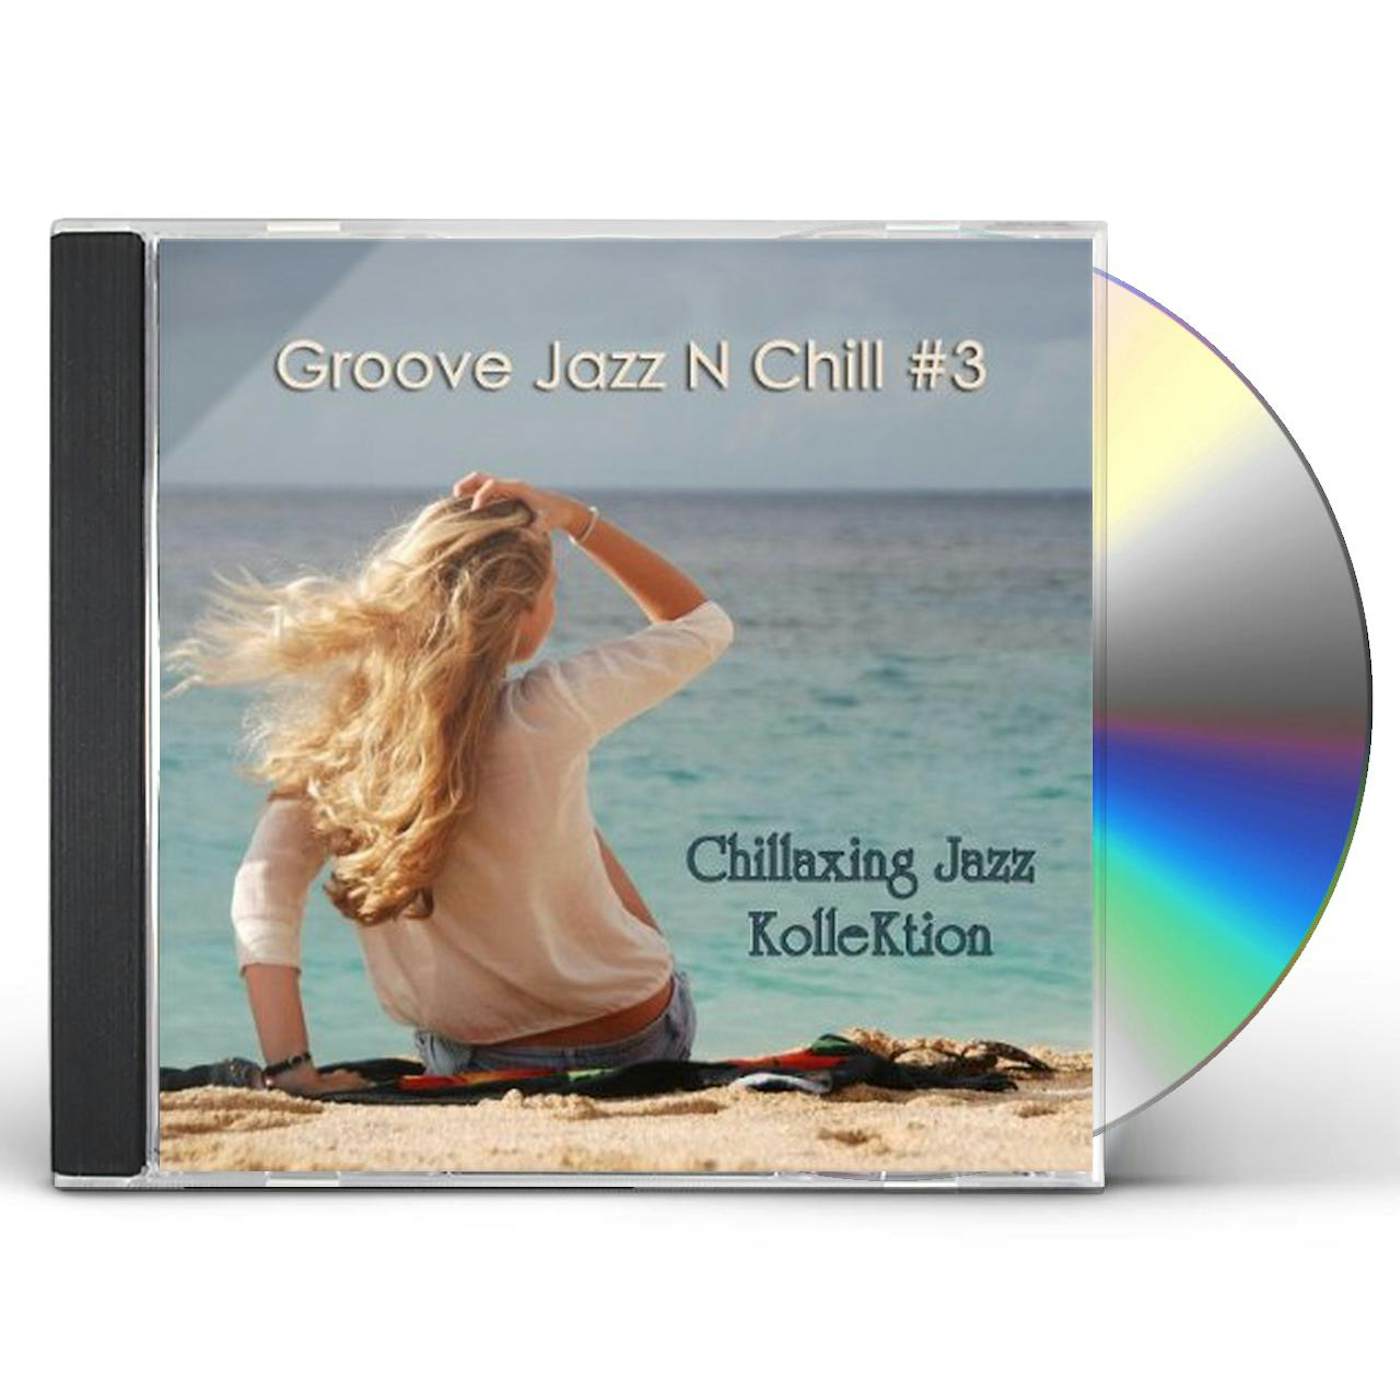 Chillaxing Jazz Kollektion GROOVE JAZZ N CHILL #3 CD